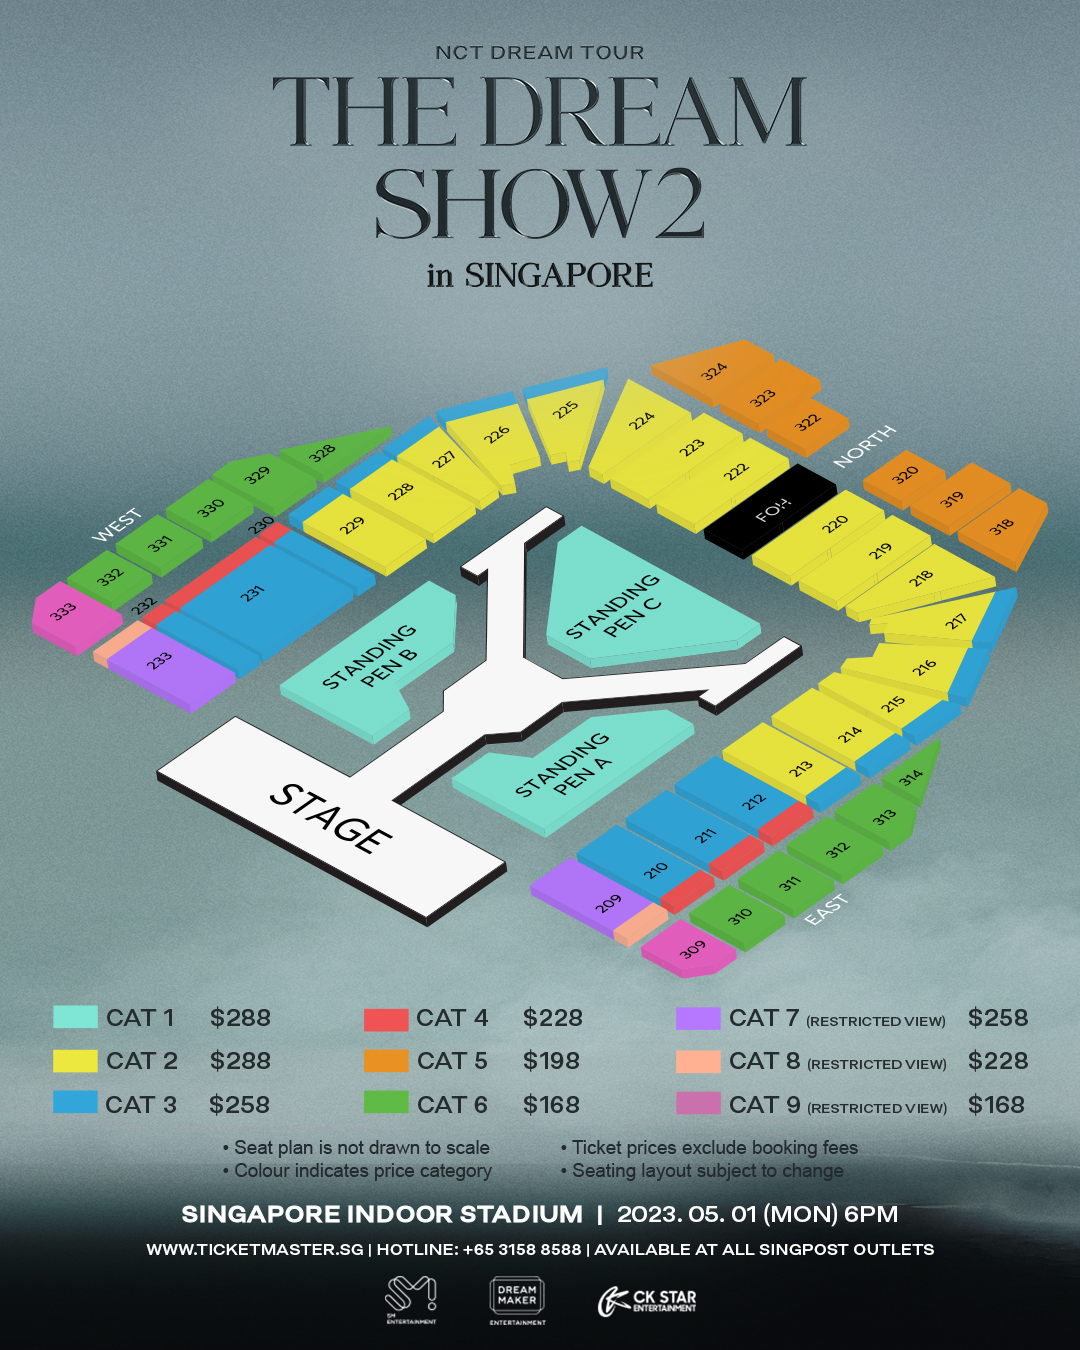 NCT DREAM TOUR 'THE DREAM SHOW2 In A DREAM' in Singapore